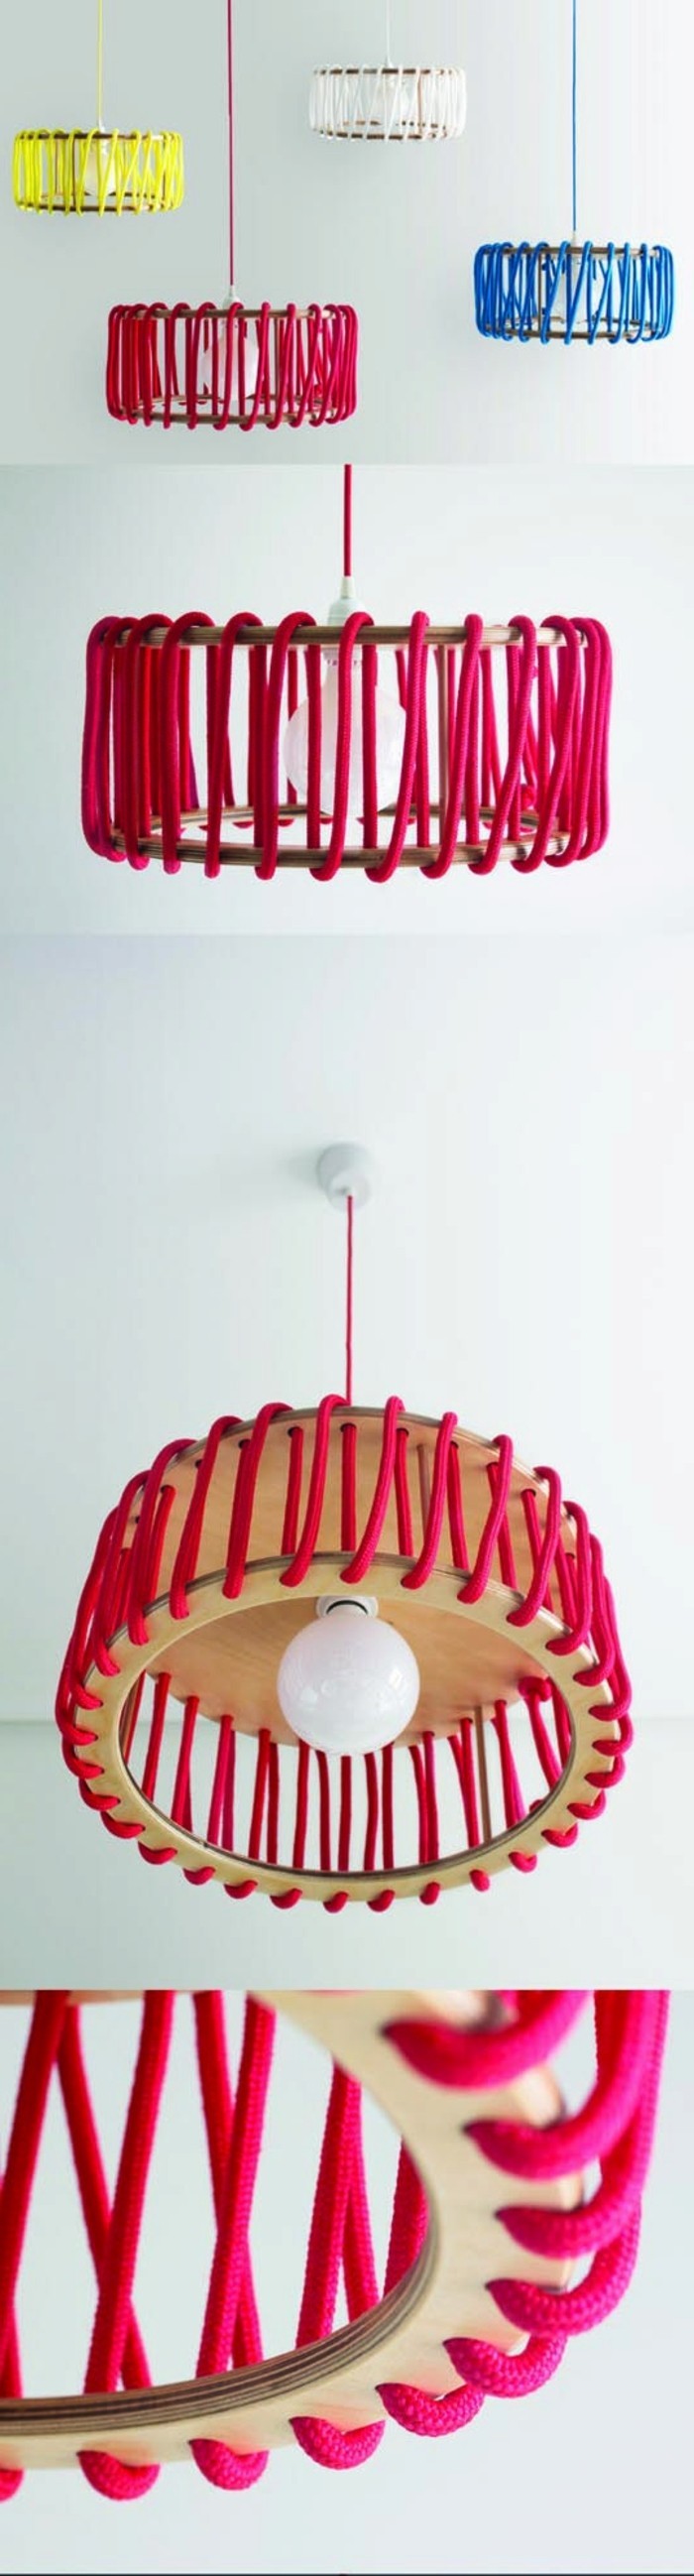 11-lampen-selber-machen-aus-holz-und-bunten-seilen-lampenschirme